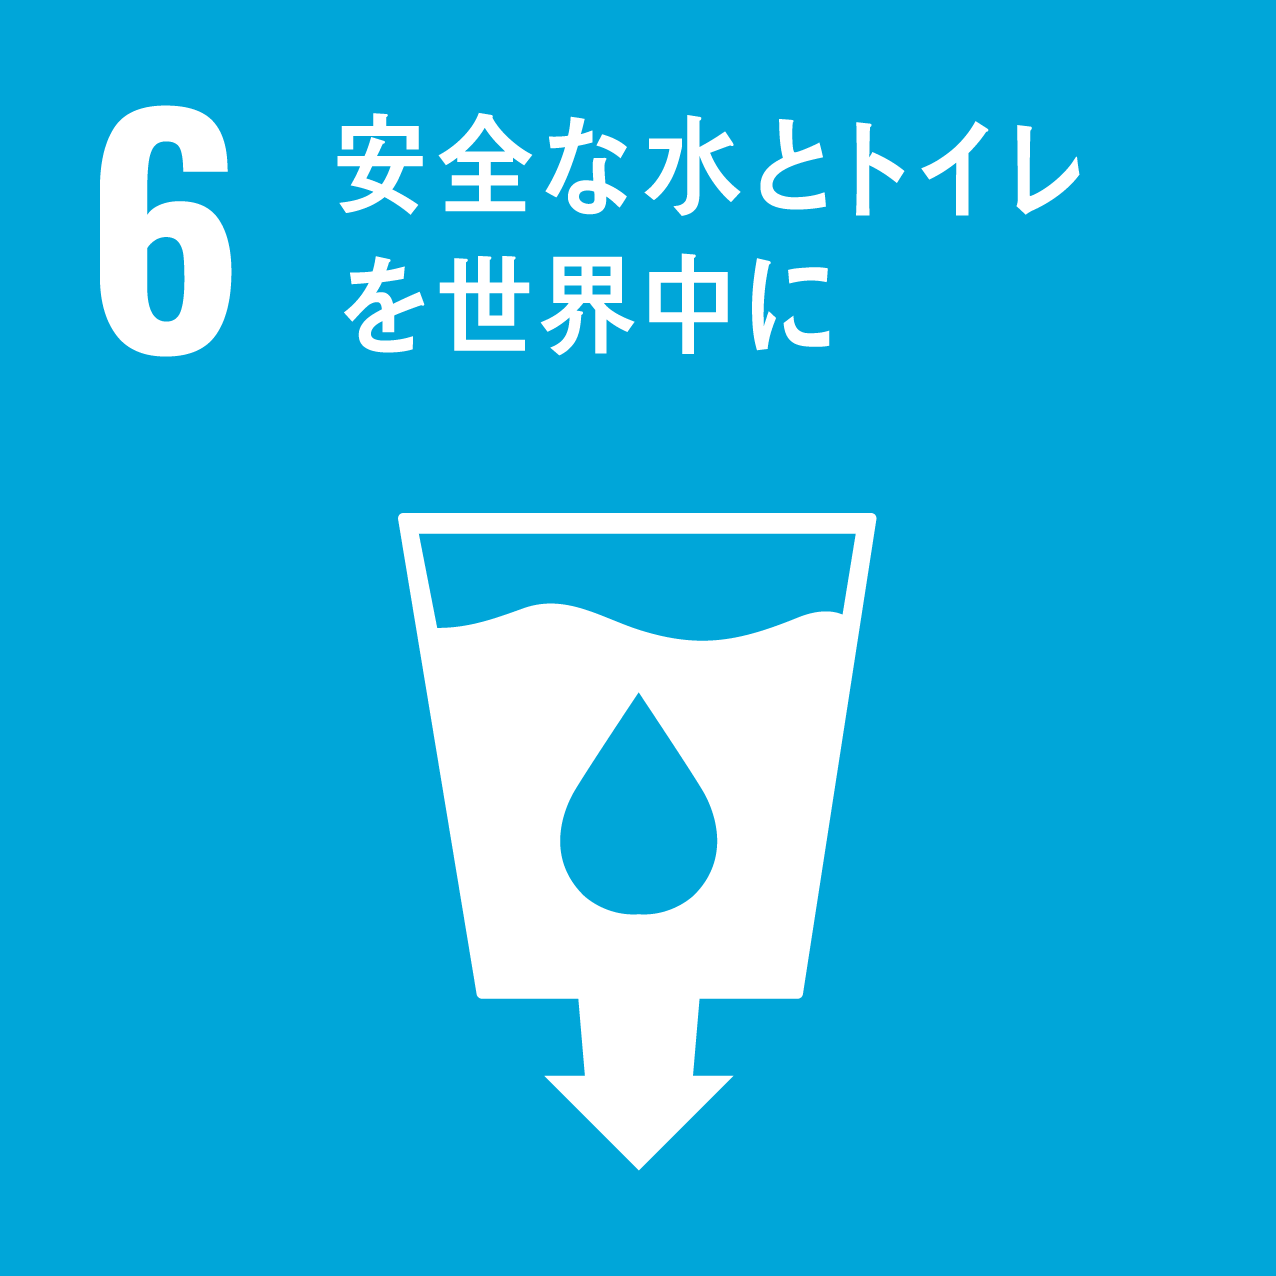 SDGsゴール6 すべての人々の水と衛生の利用可能性と持続可能な管理を確保する